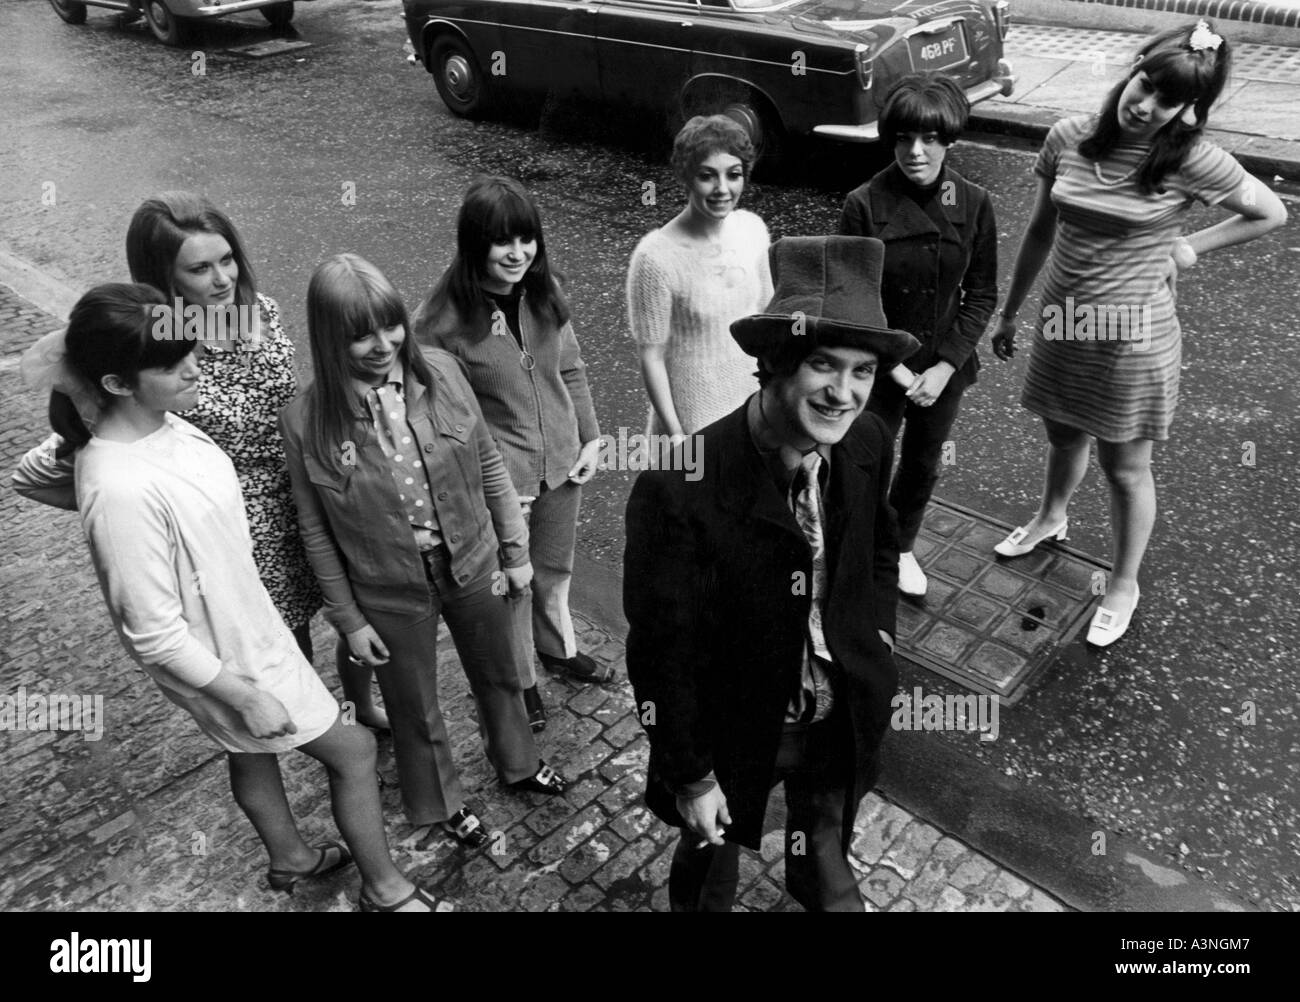 RAY DAVIES von the Kinks im Mai 1967 mit Bewunderern in der Carnaby Street. Foto Tony Gale Stockfoto